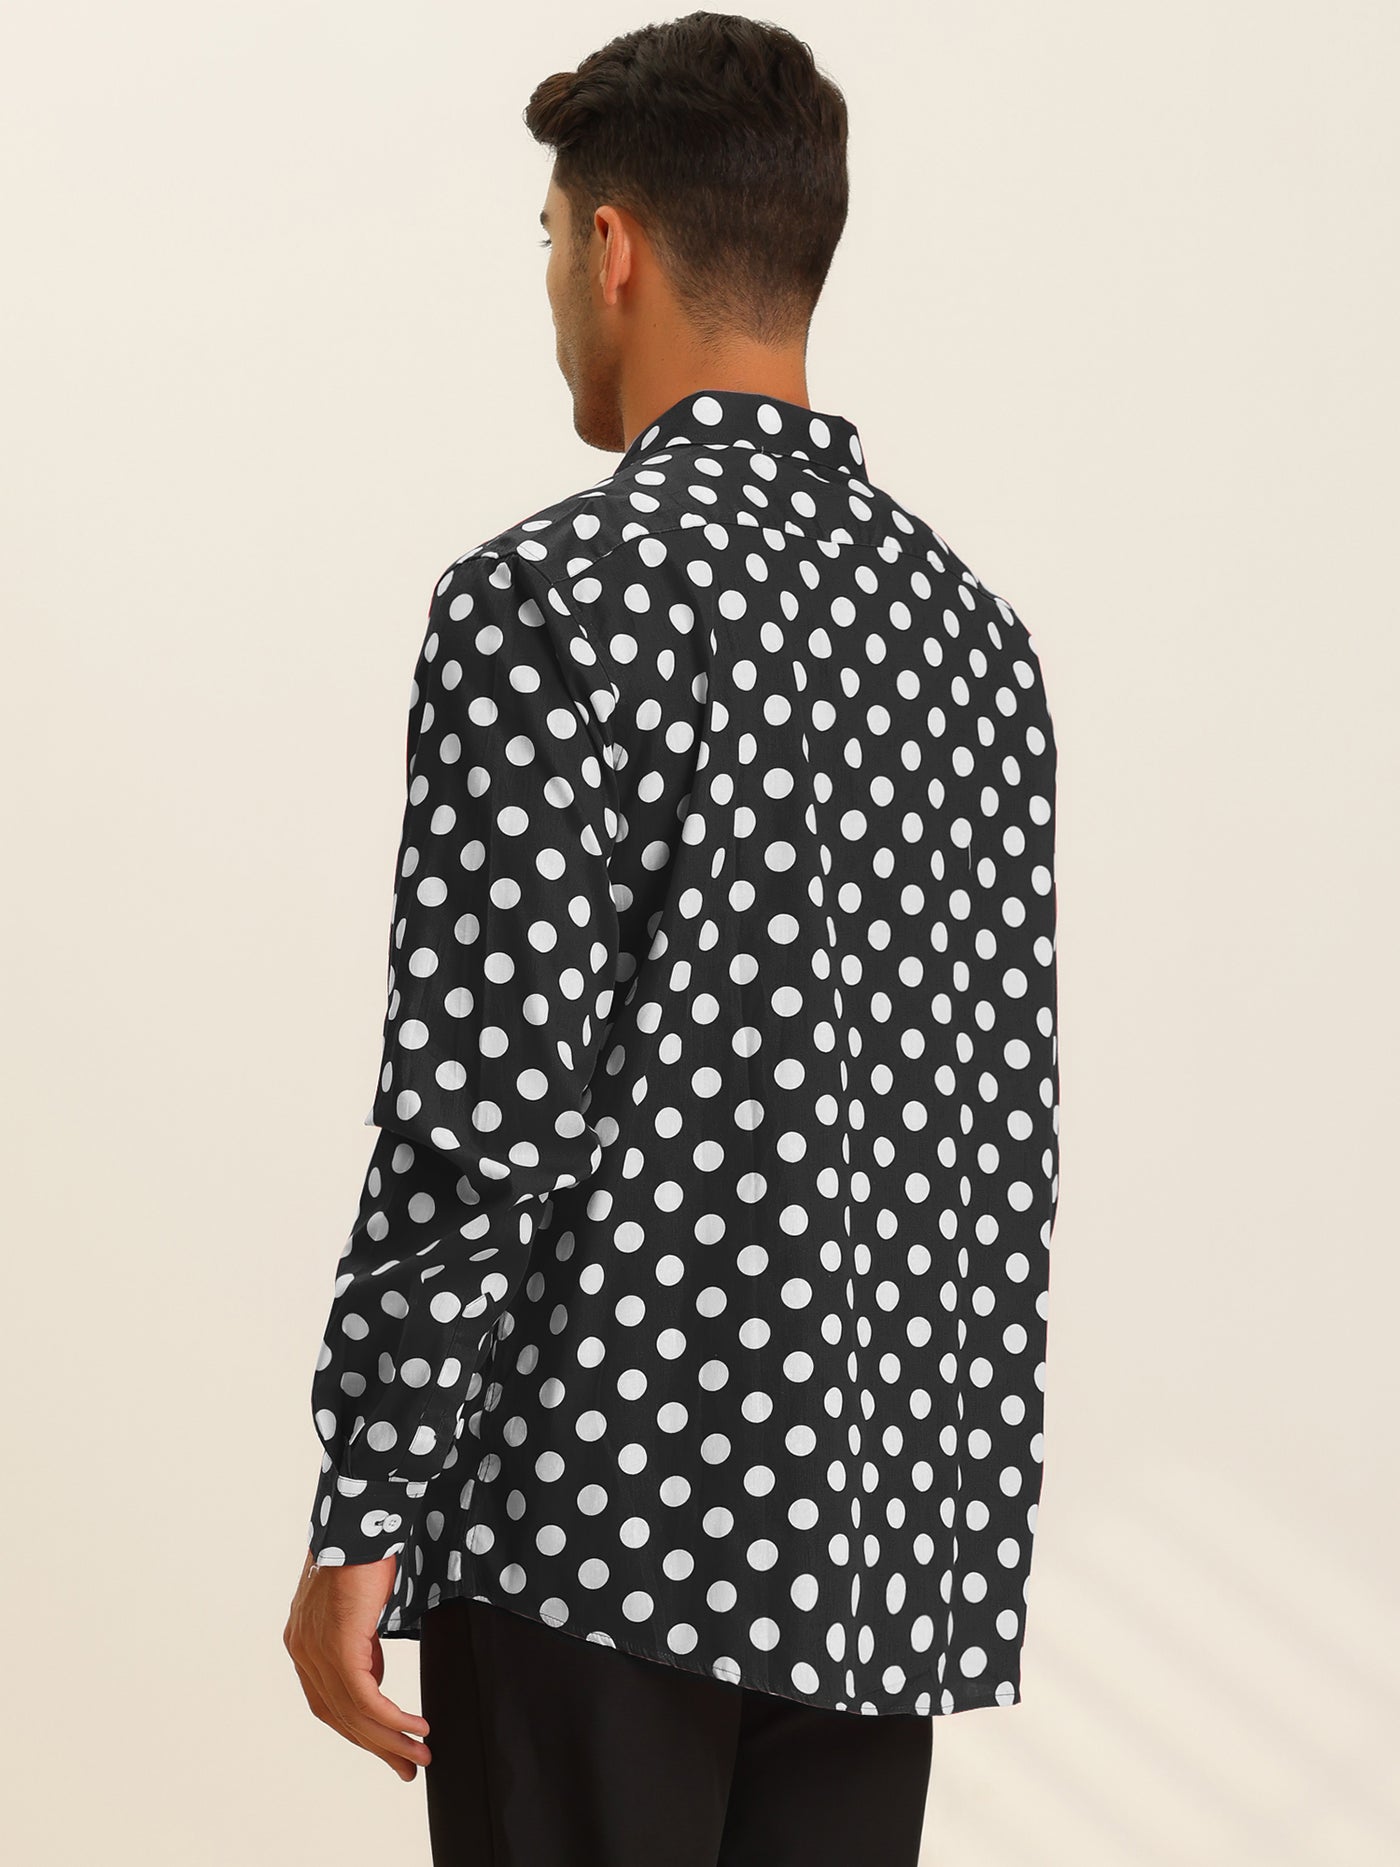 Bublédon Men's Polka Dots Button Down Long Sleeves Slim Fit Shirts